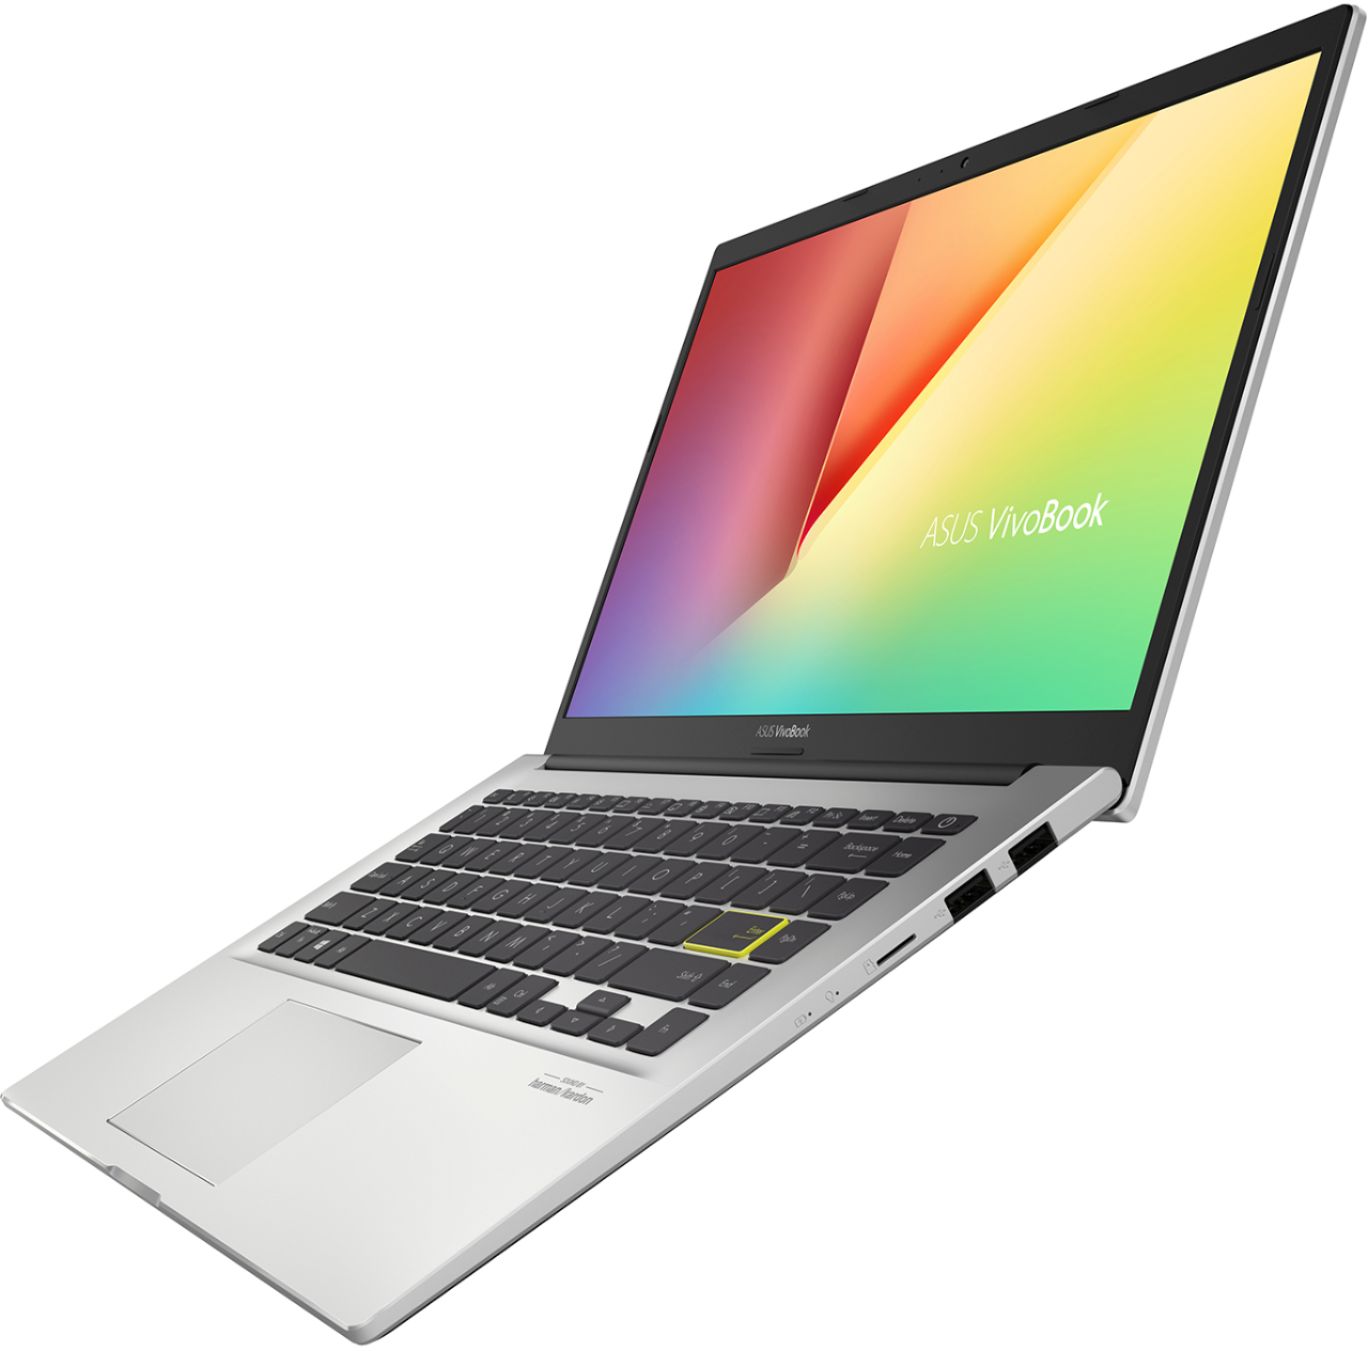 Asus Vivobook 14 Laptop - Intel 10th Gen I3 - 4gb Memory - 128gb Ssd